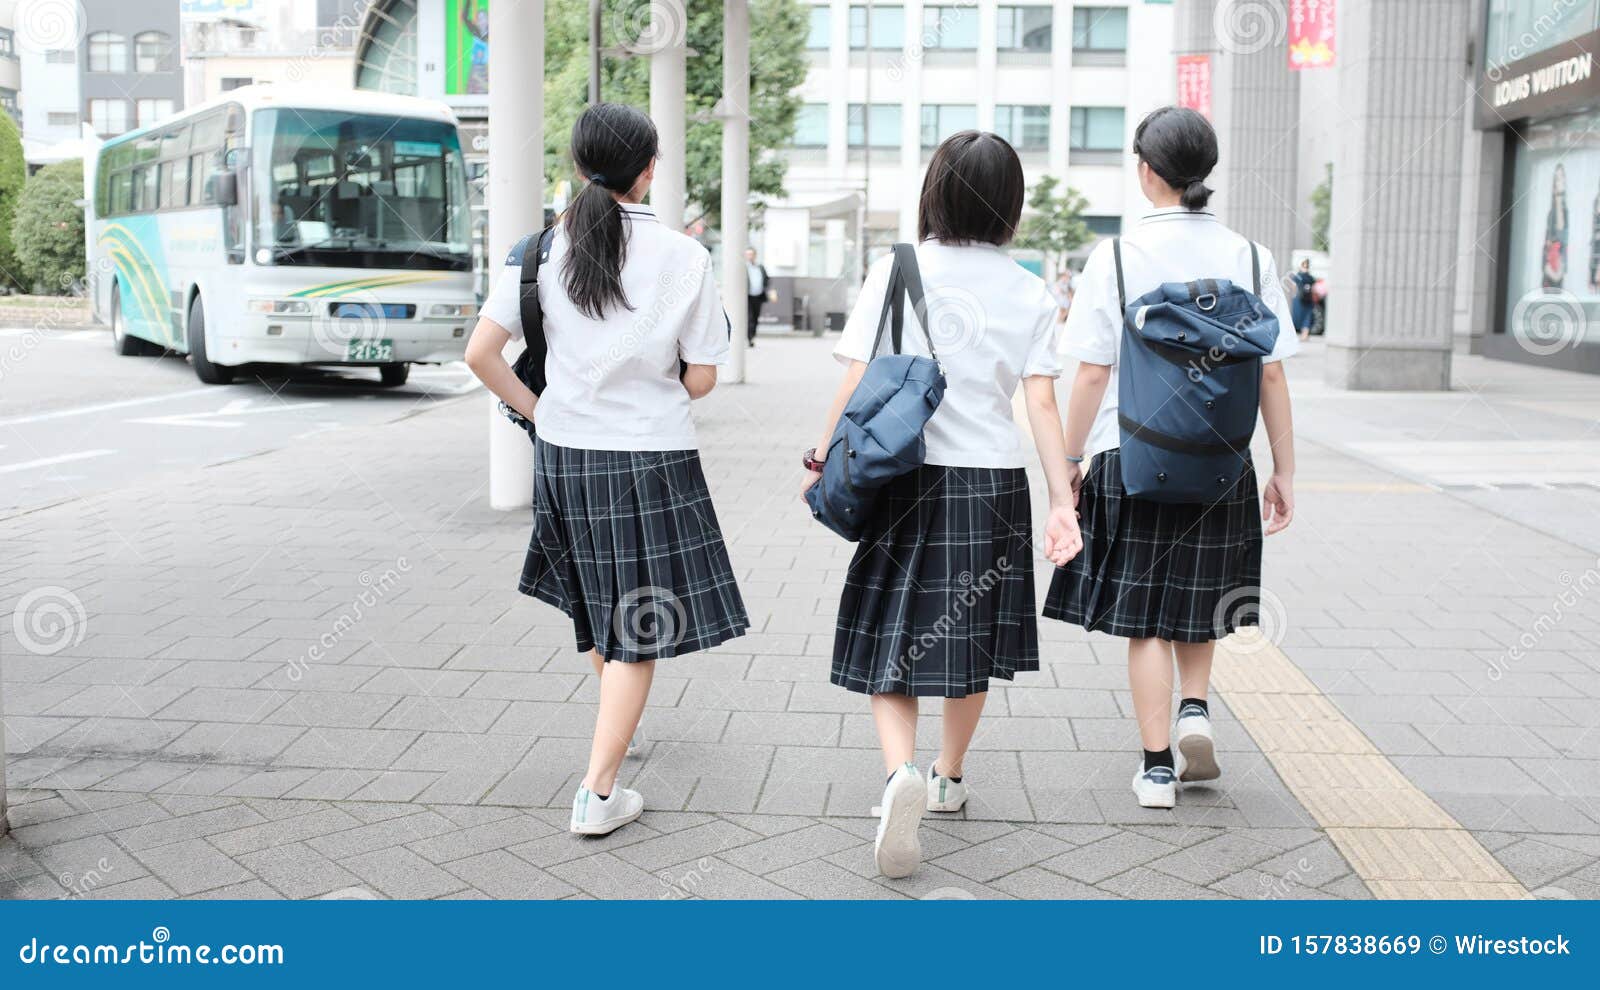 schoolgirl japanese public bus